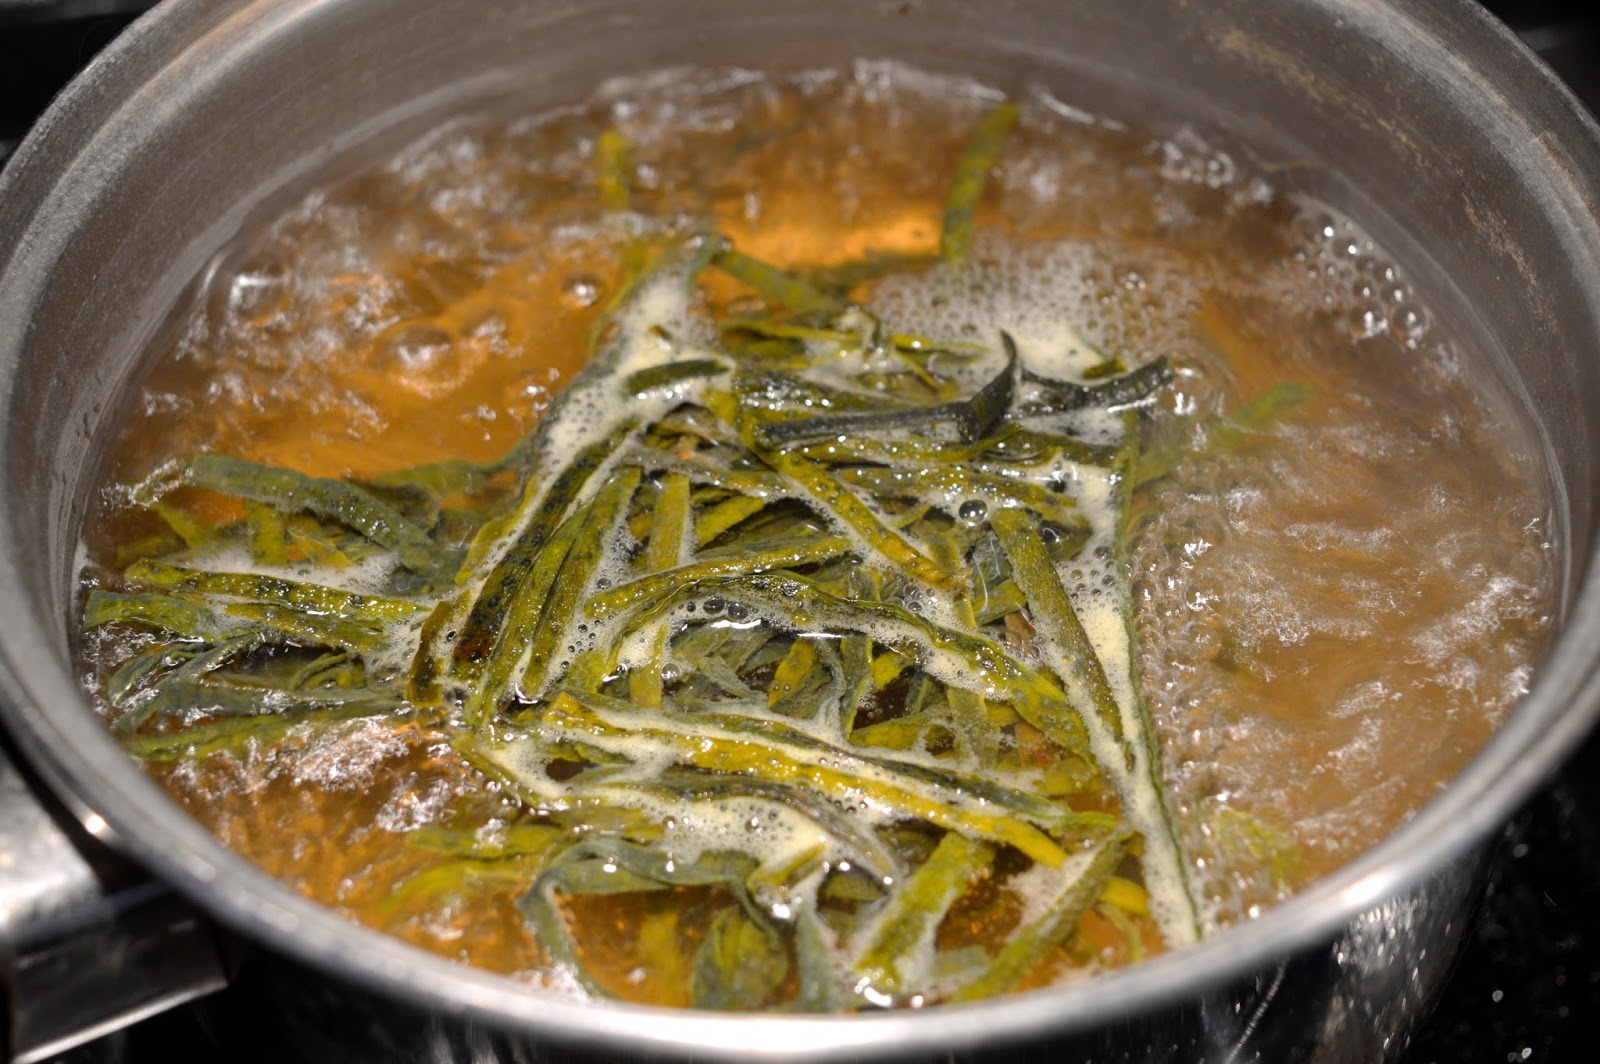 I Sea Pasta review, squid and seaweed pasta recipe, UK food blog, food bloggers